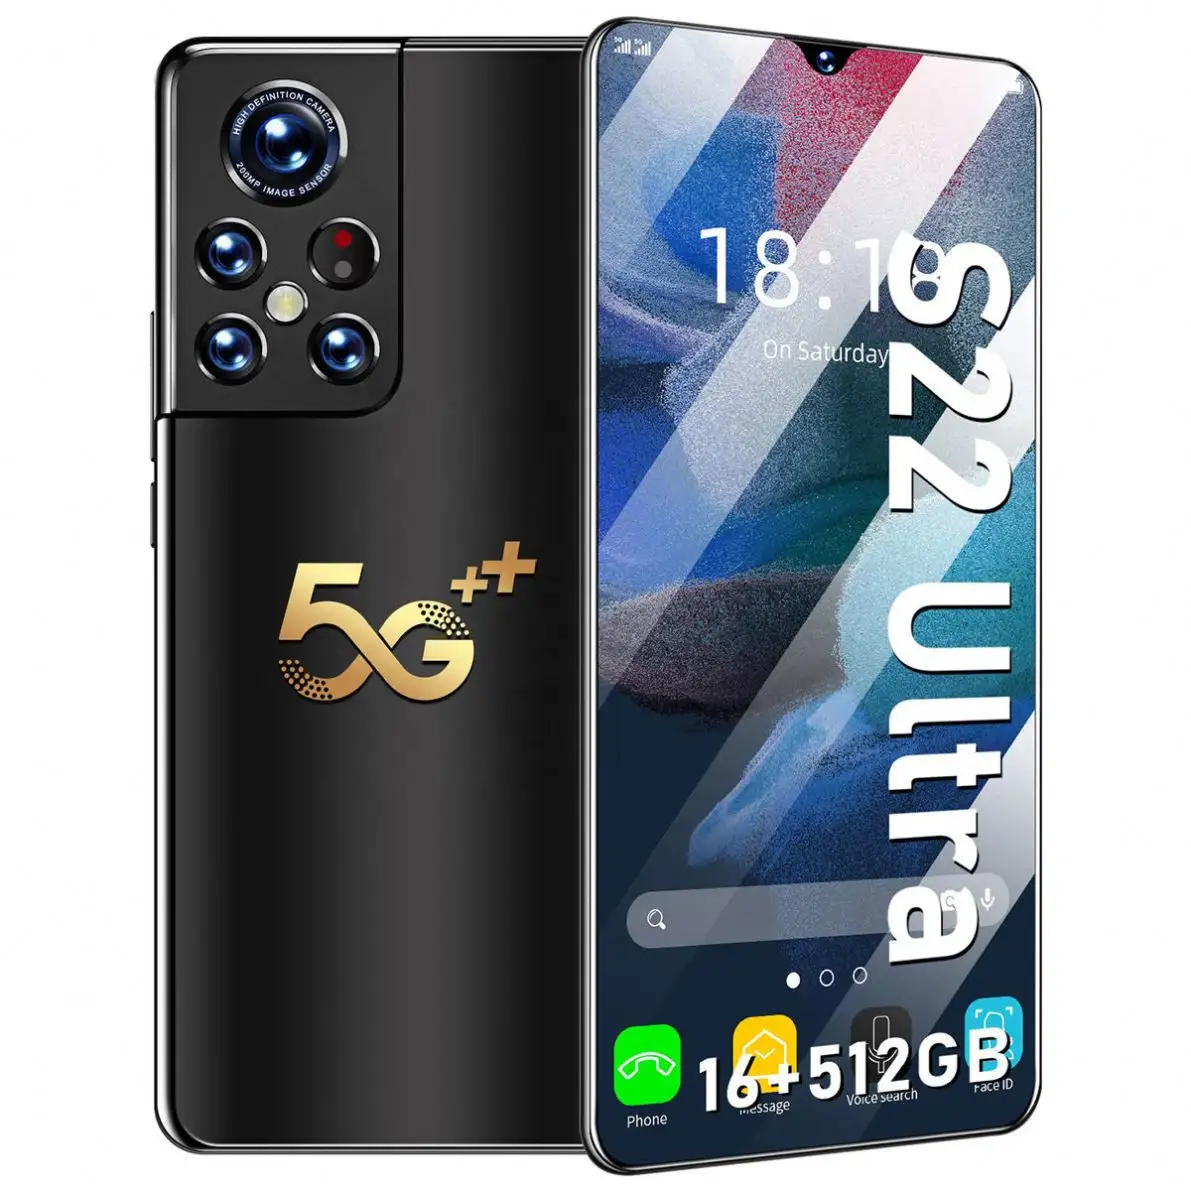 هاتف ذكي S22 ultra s21 + pro جديد 2022, هاتف ذكي S22 ultra s21 + pro 8GB + 256GB هاتف ذكي 5G هاتف محمول صغير 2Nd هاتف رخيص السعر